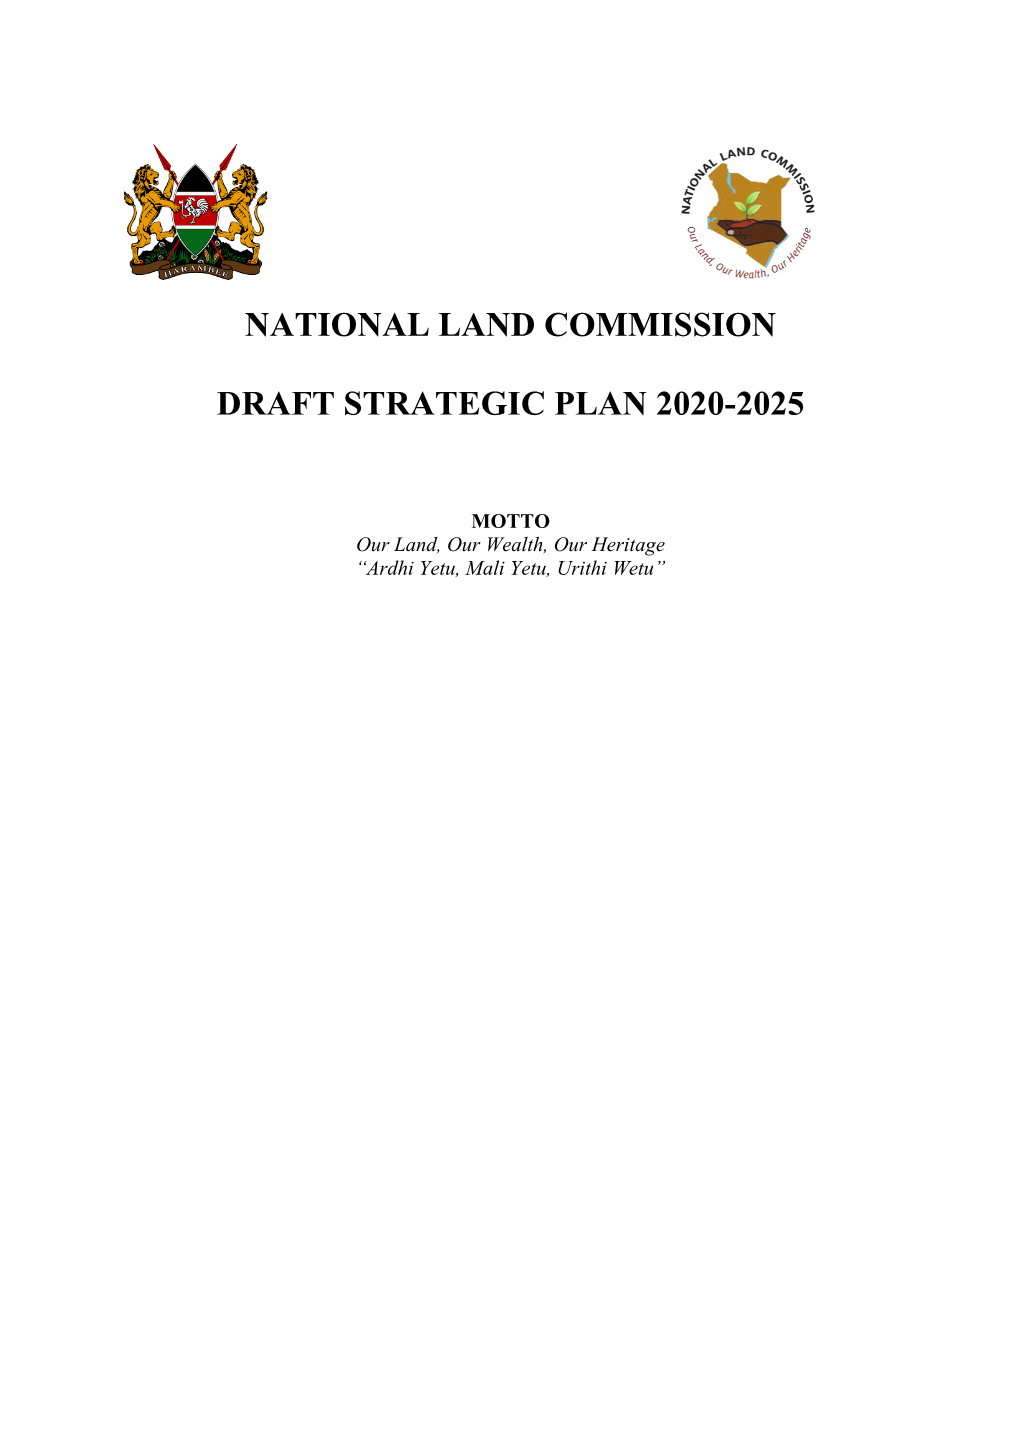 National Land Commission Draft Strategic Plan 2020-2025